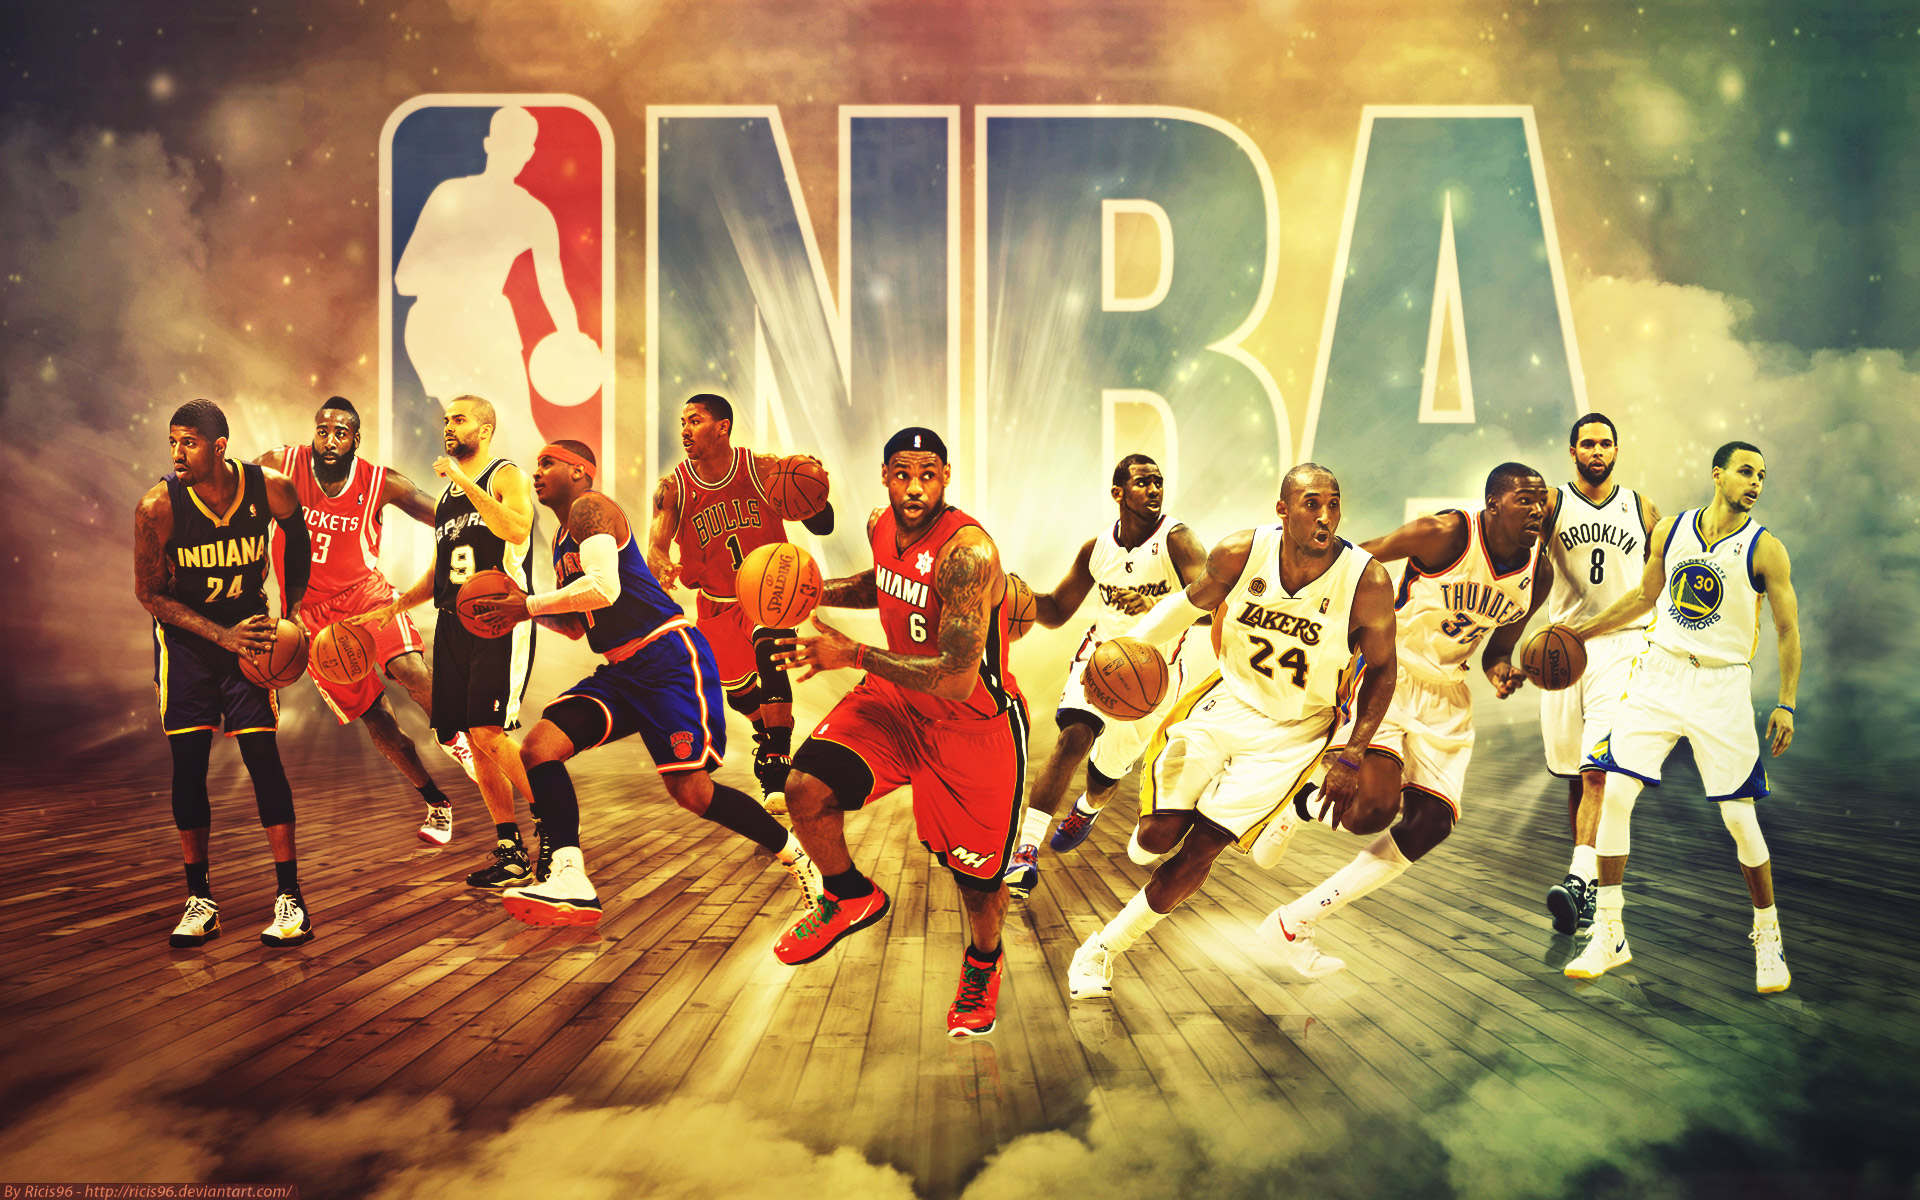 Team Wallpaper Share This Cool Nba Basketball